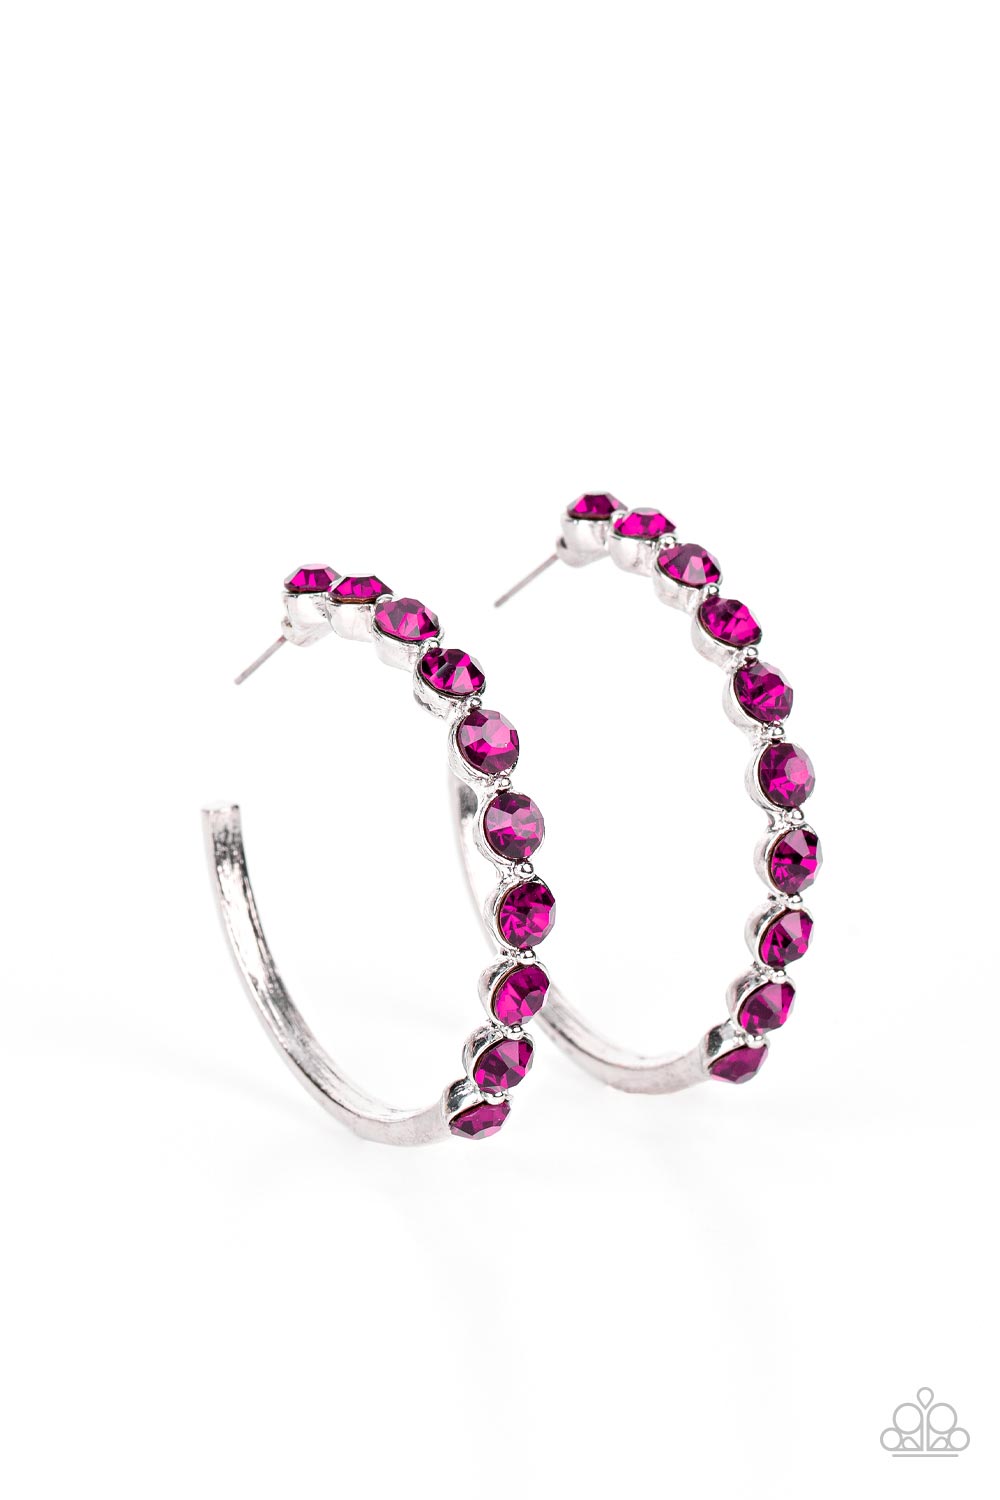 Photo Finish Pink Rhinestone Hoop Earrings - Paparazzi Accessories- lightbox - CarasShop.com - $5 Jewelry by Cara Jewels